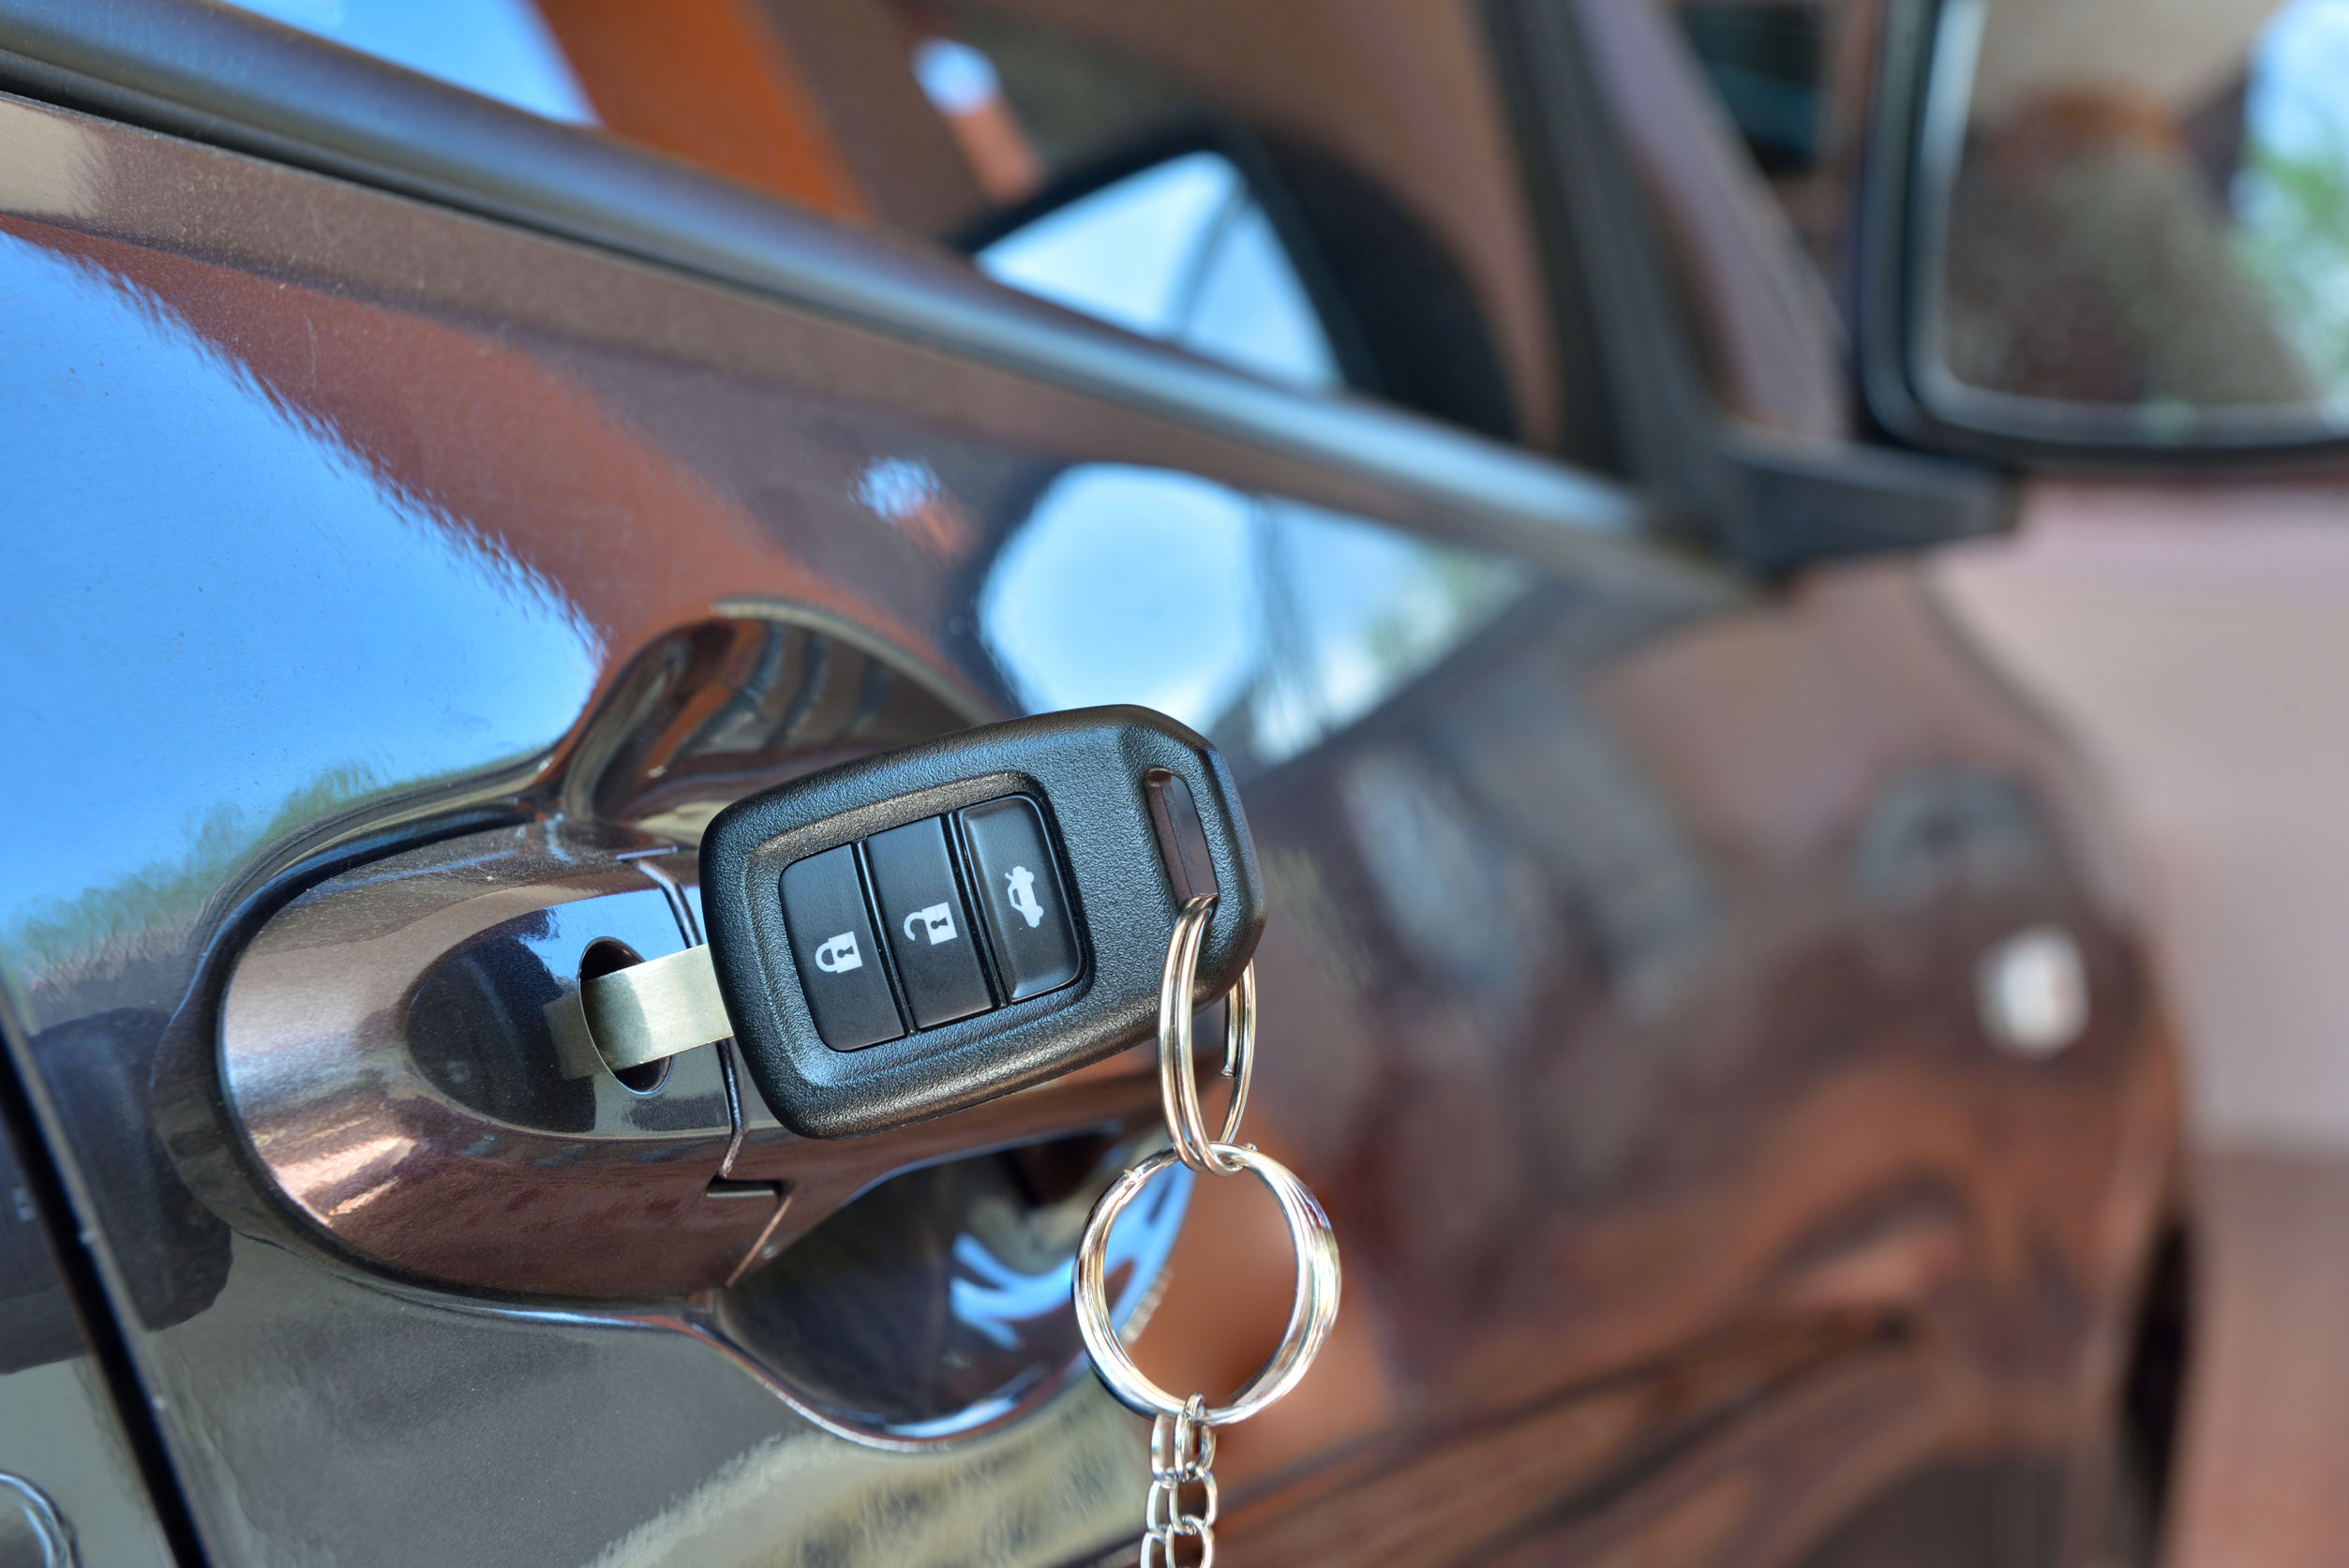 Keyed my car. Ключ автомобильный. Ключи от авто. Автомобильные ключи с сигнализацией. Красивый ключ для автомобиля.